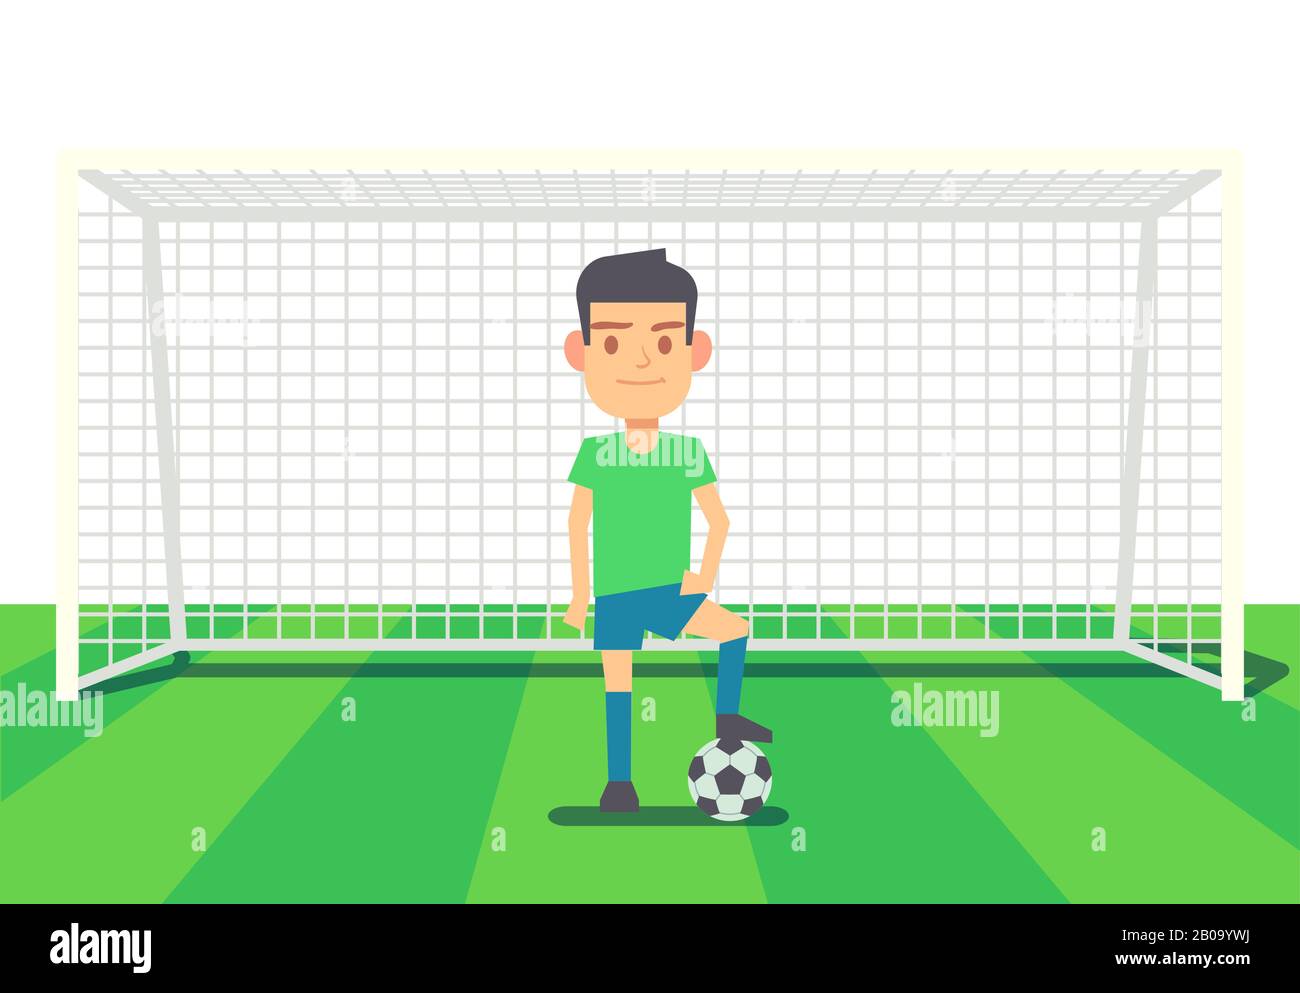 Fußball-Torwart hält Tor auf Arena-Vektor-Illustration Zeichentricktorhüter mit Ball Stock Vektor